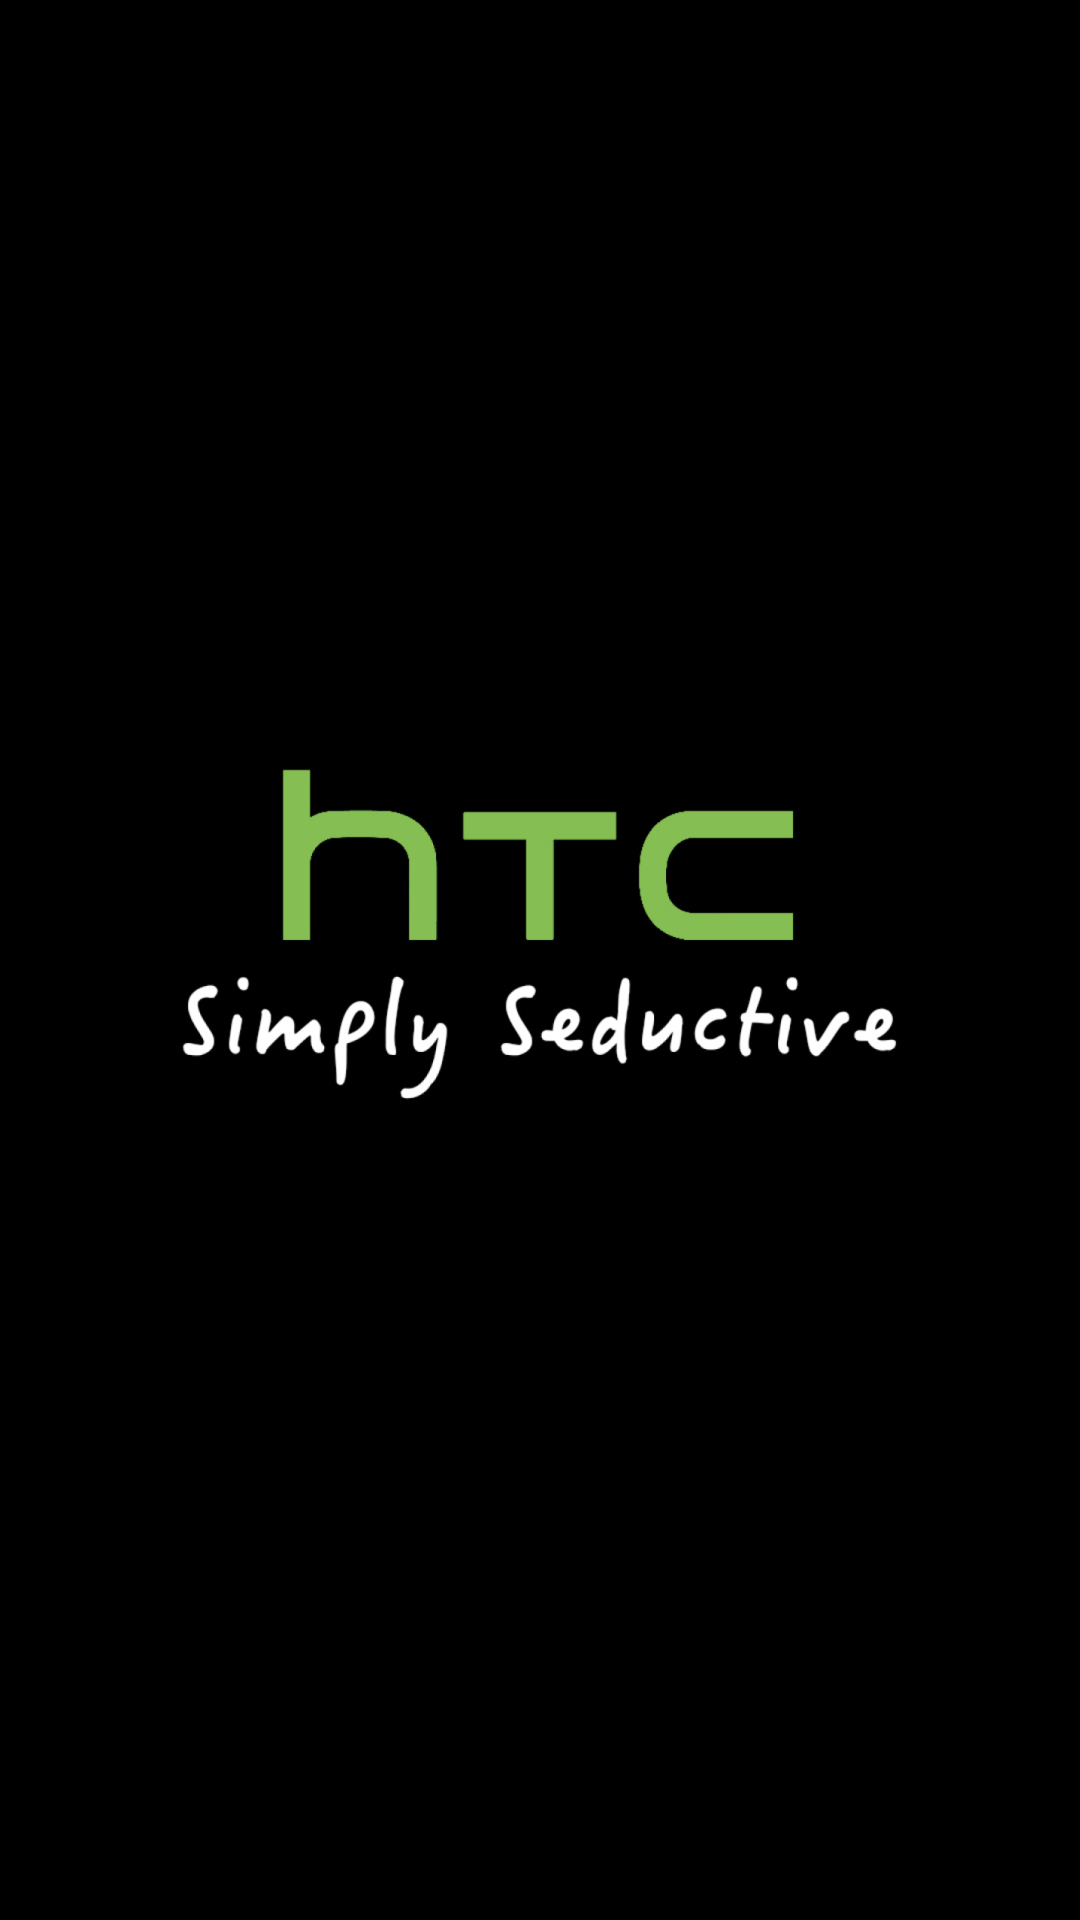 Das HTC - Simply Seductive Wallpaper 1080x1920